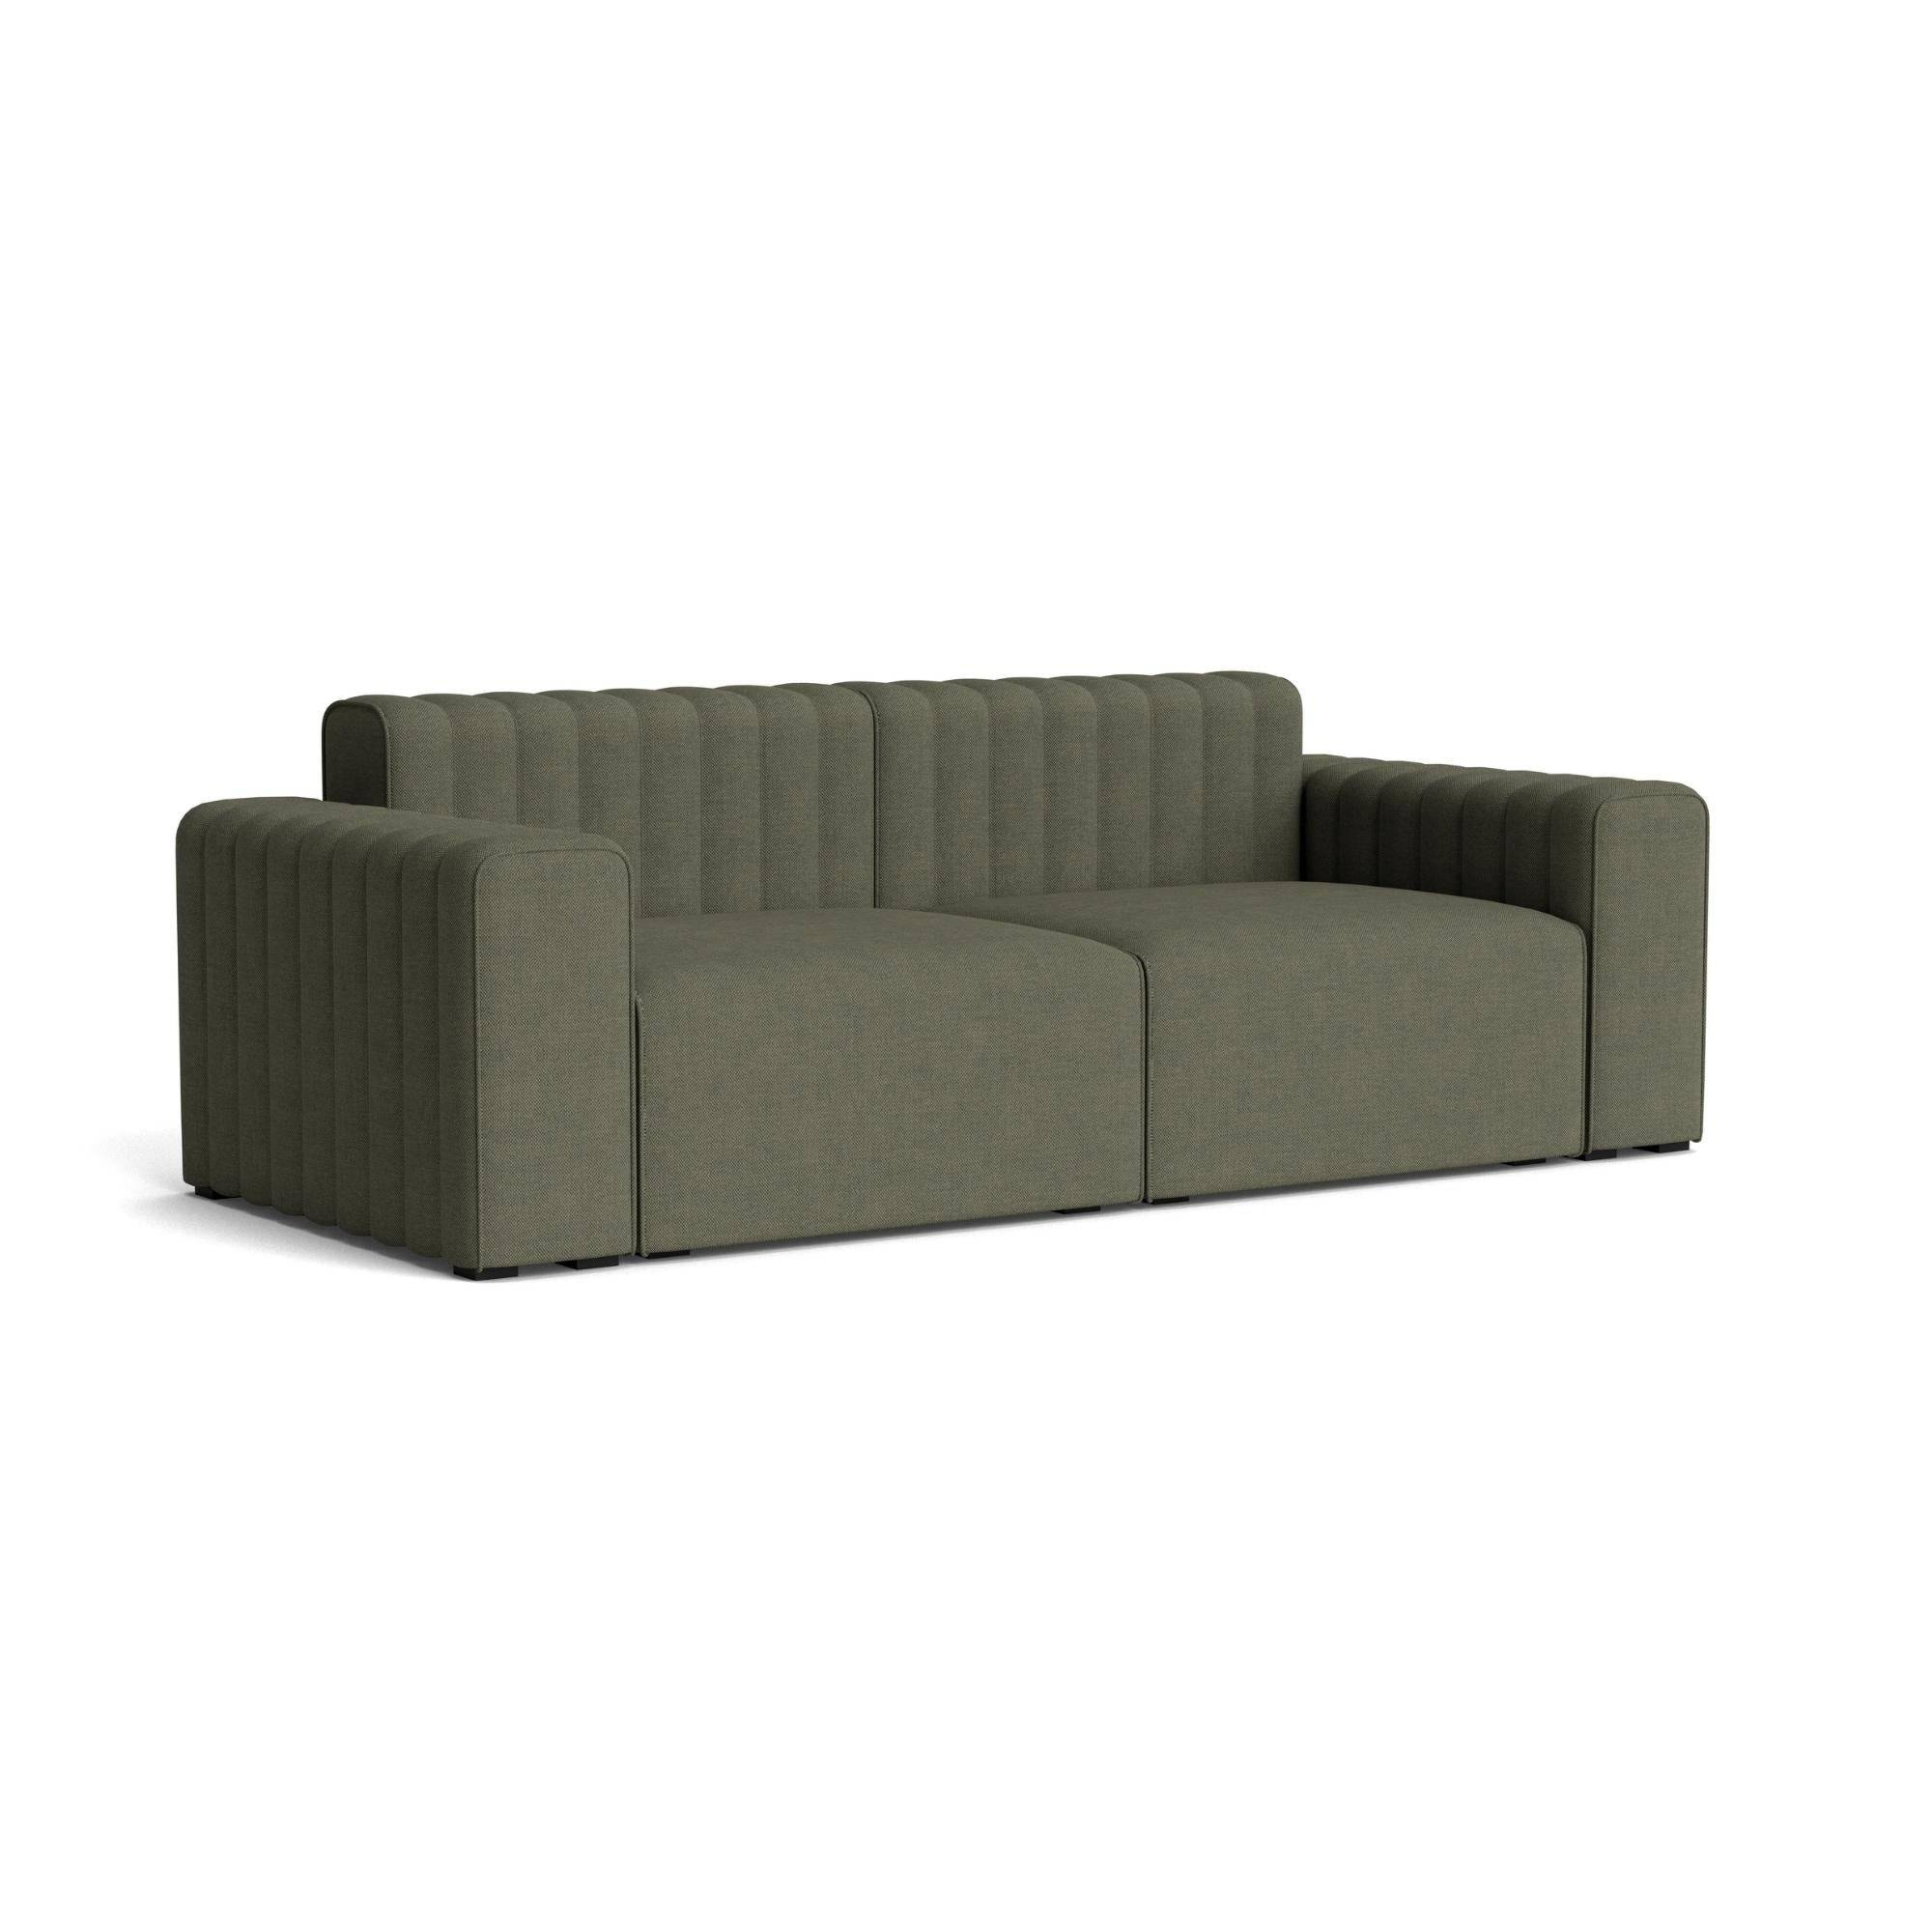 Riff Sofa 210 cm - THAT COOL LIVING